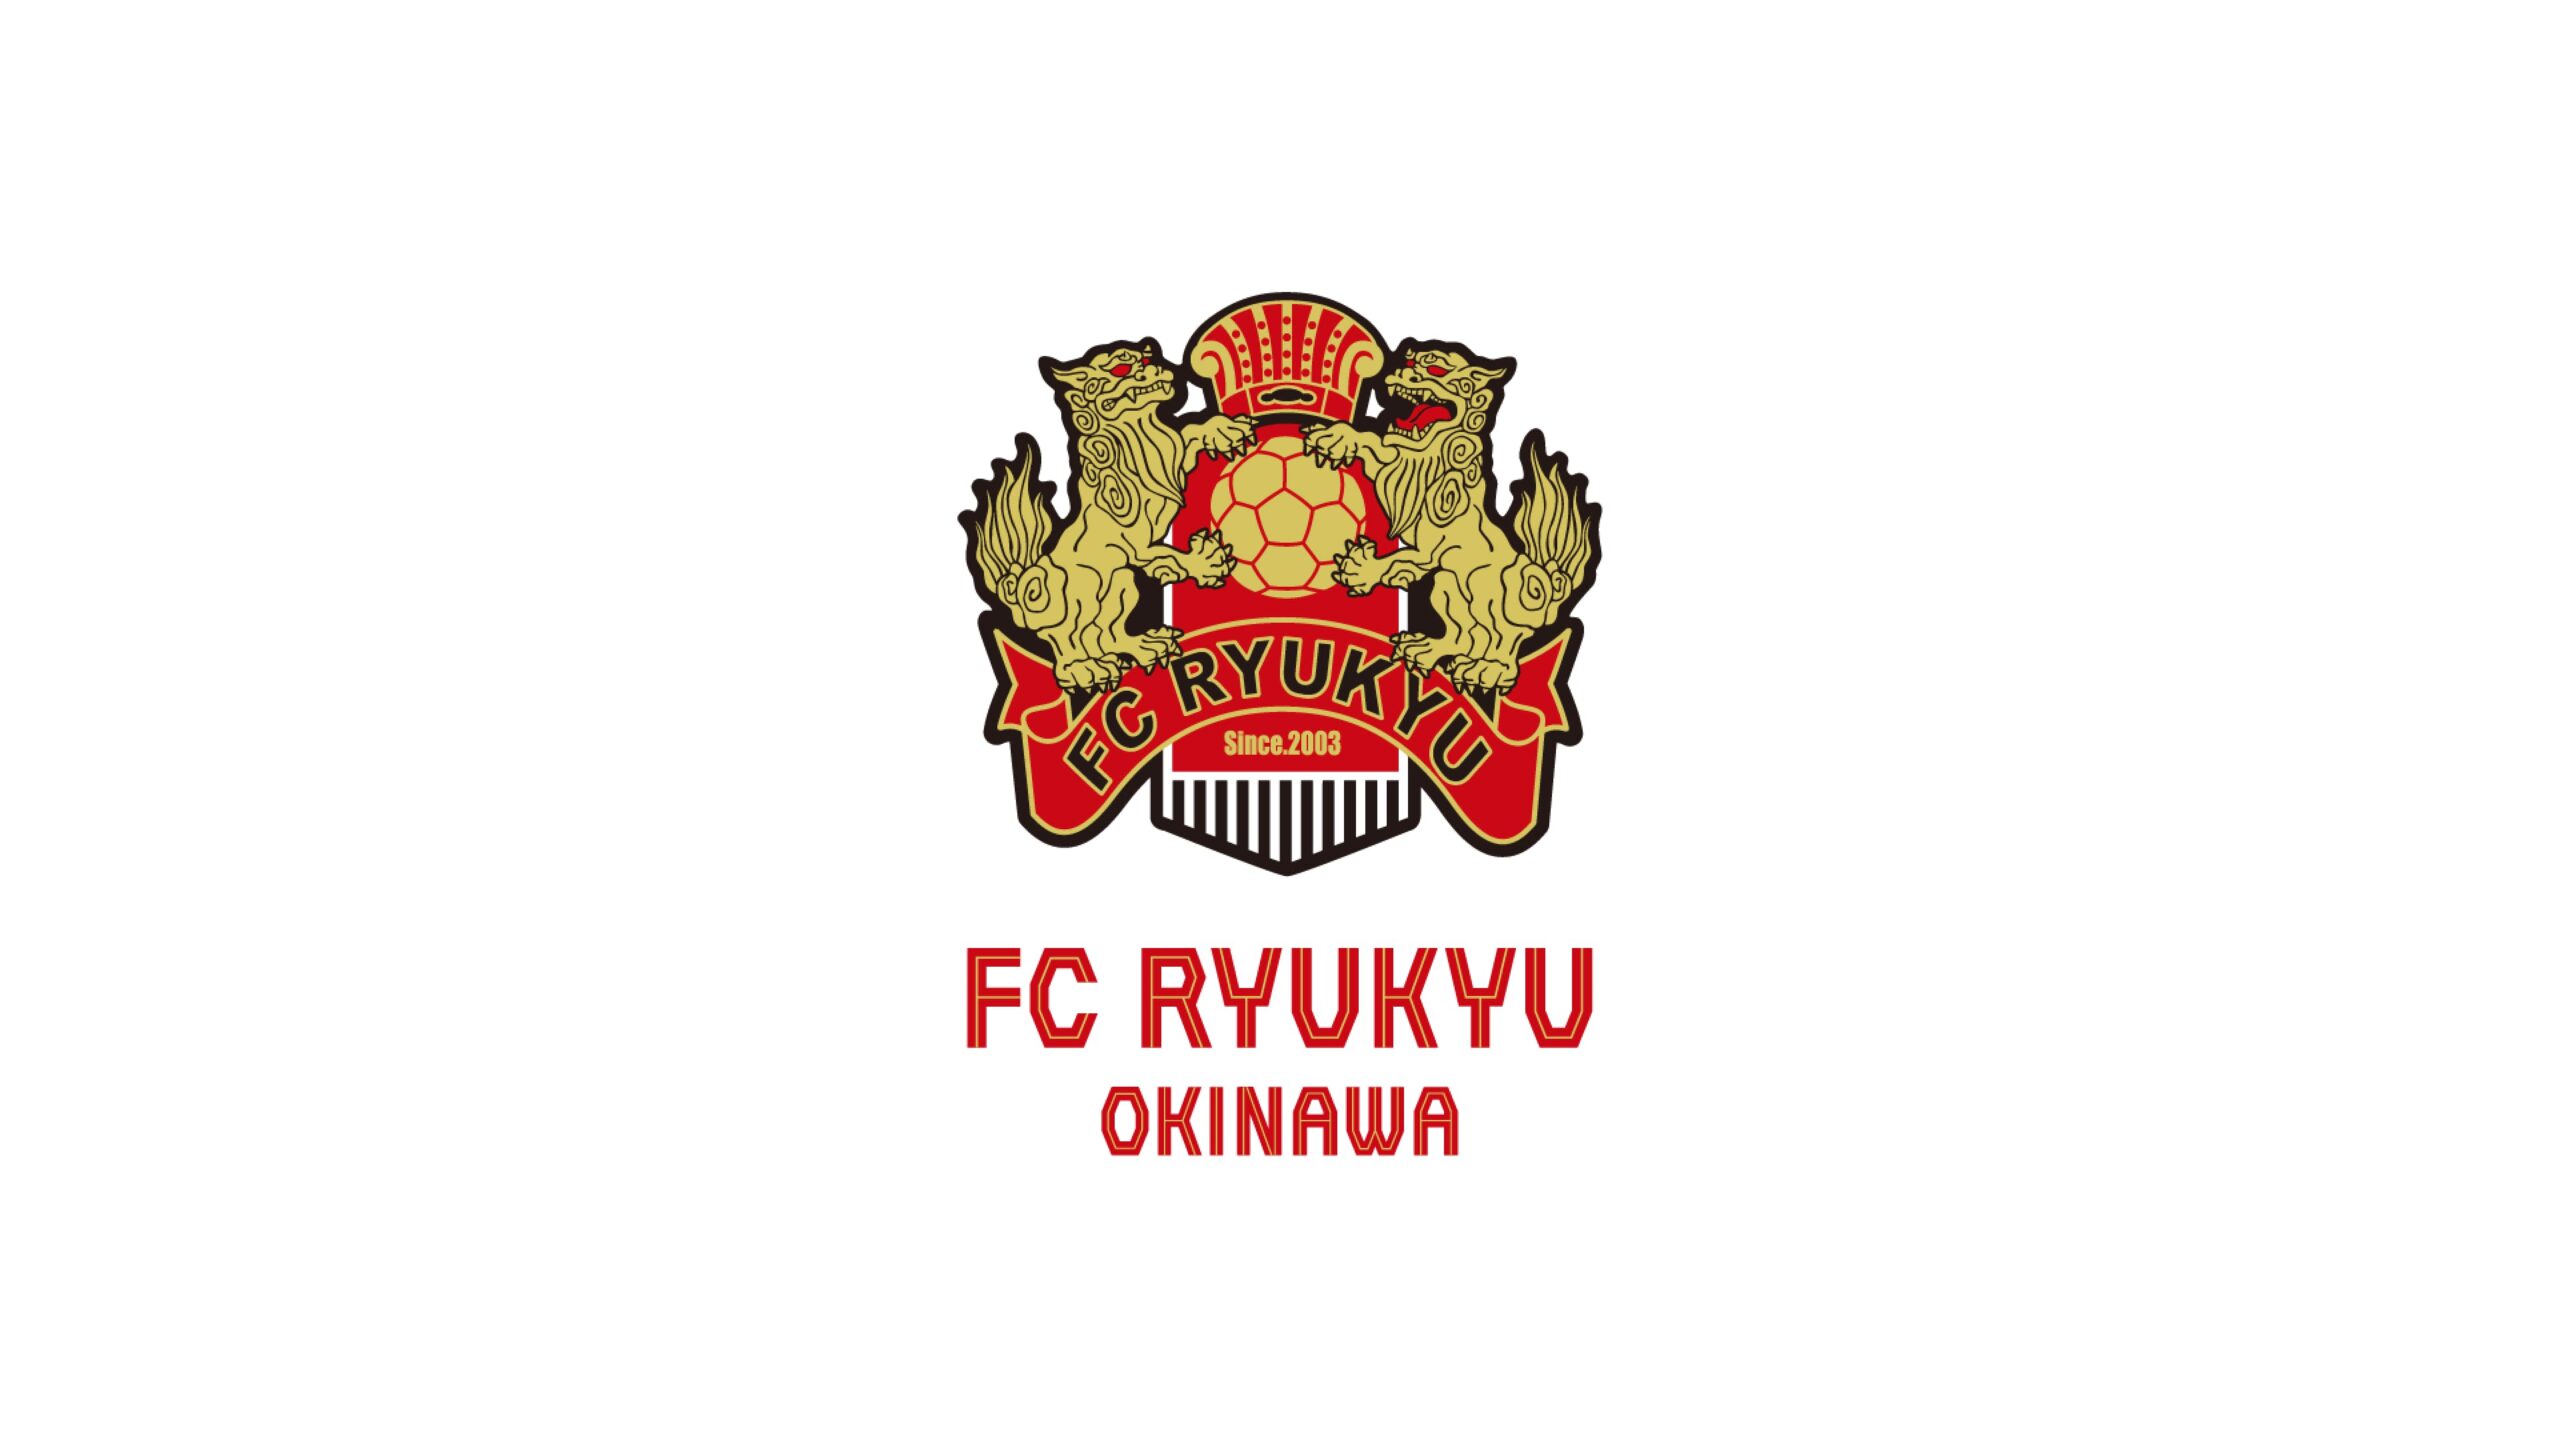 「FC琉球OKINAWA」を運営する琉球フットボールクラブ株式会社が株式会社カヤックより資金調達を実施